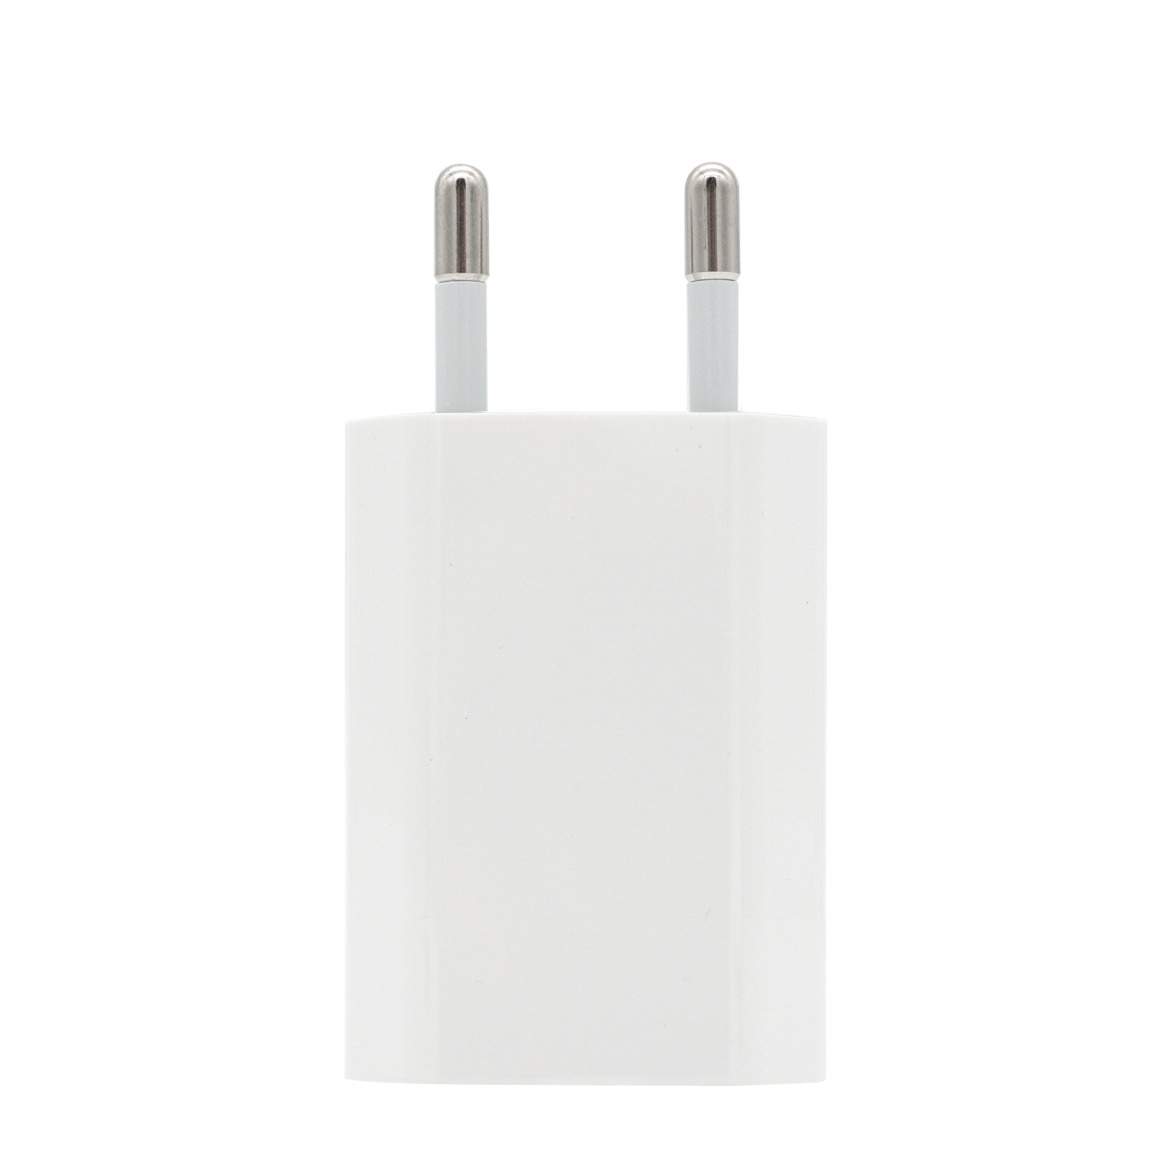 Image of Apple - iPhone 8 Plus Ladegerät / USB Netzteil 5W A1400 MD813ZM/A - Weiss bei Apfelkiste.ch